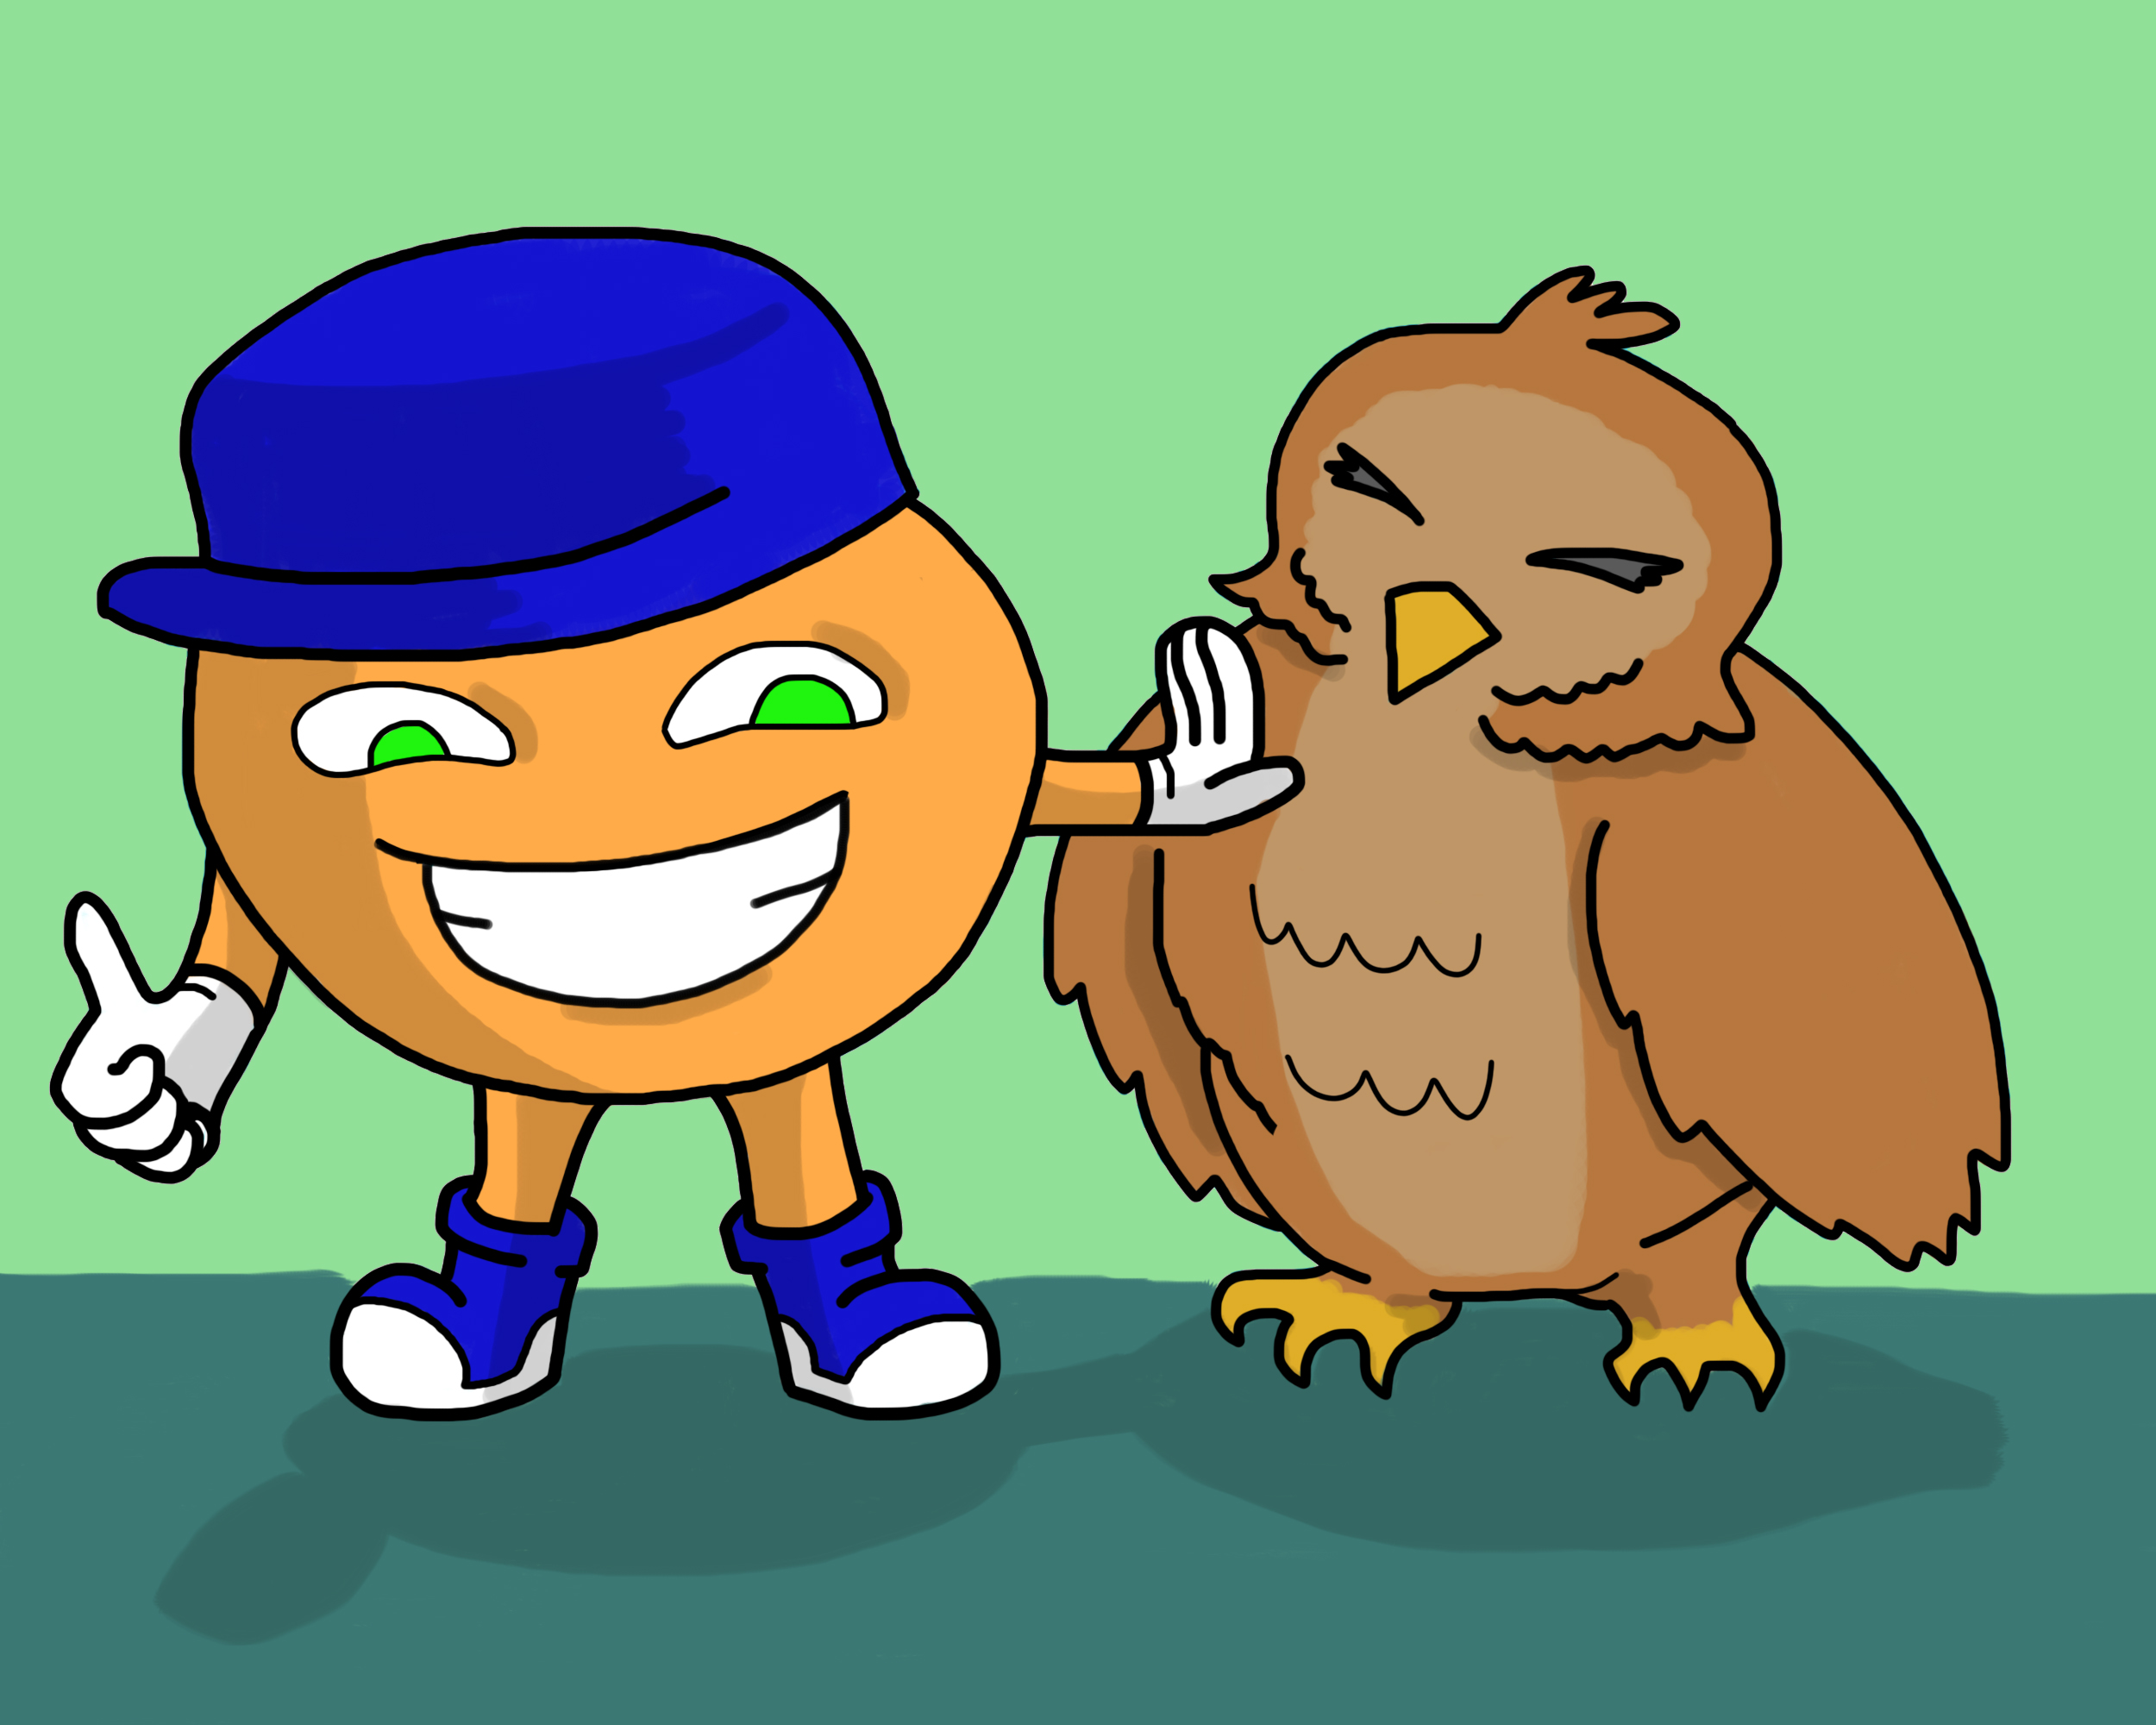 Do owls and oranges really make a good pair?